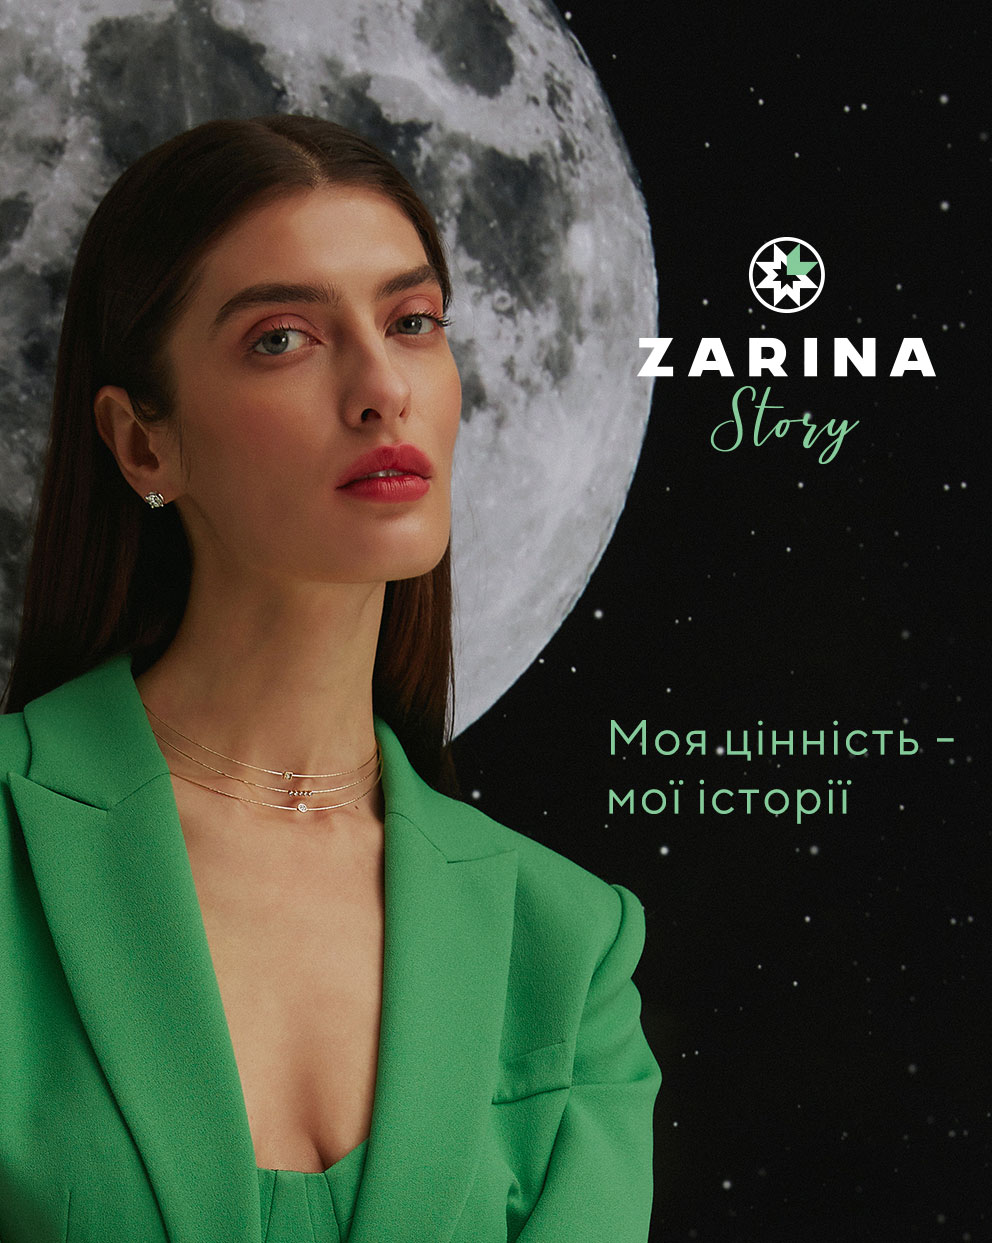 ZARINA Story